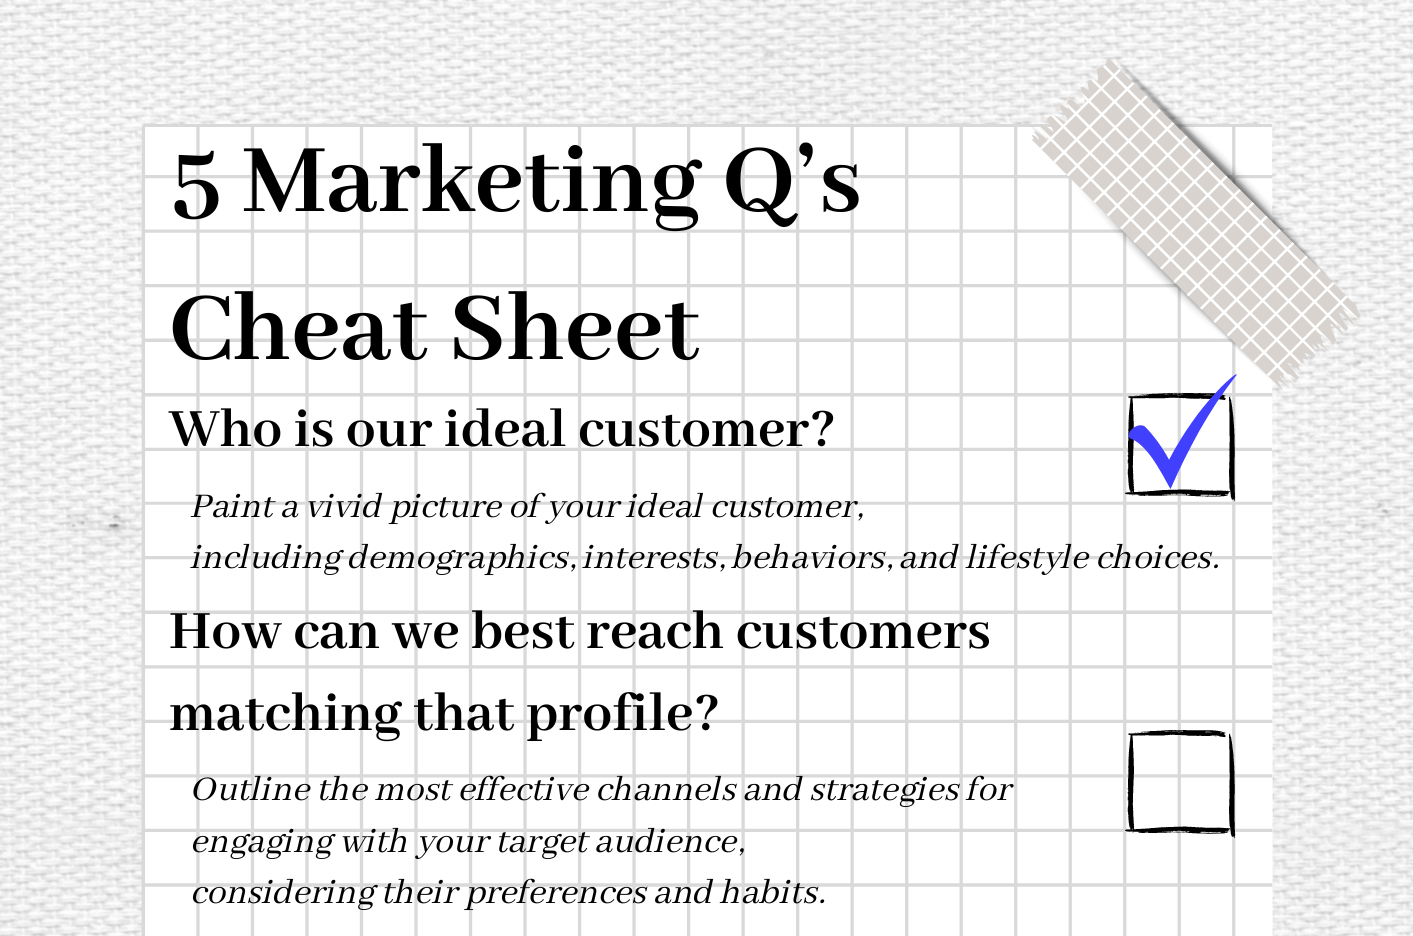 5 Marketing Questions Cheat Sheet